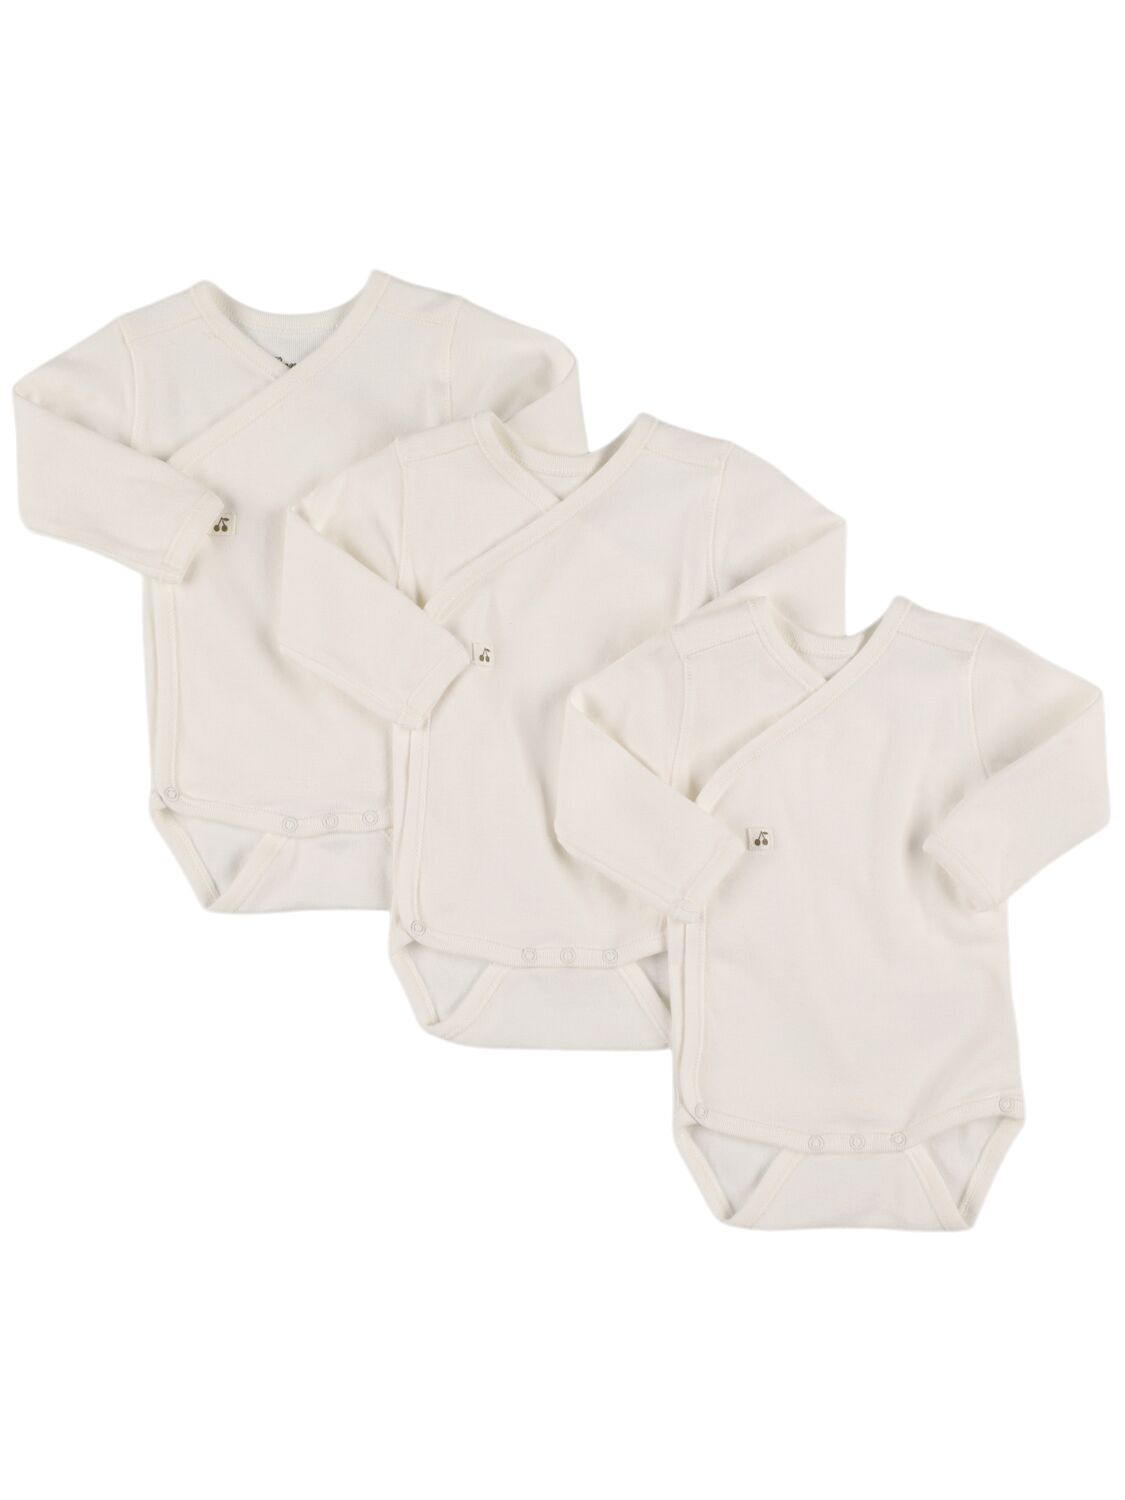 Bonpoint Babies' Set Of 3 Cotton Bodysuits In White